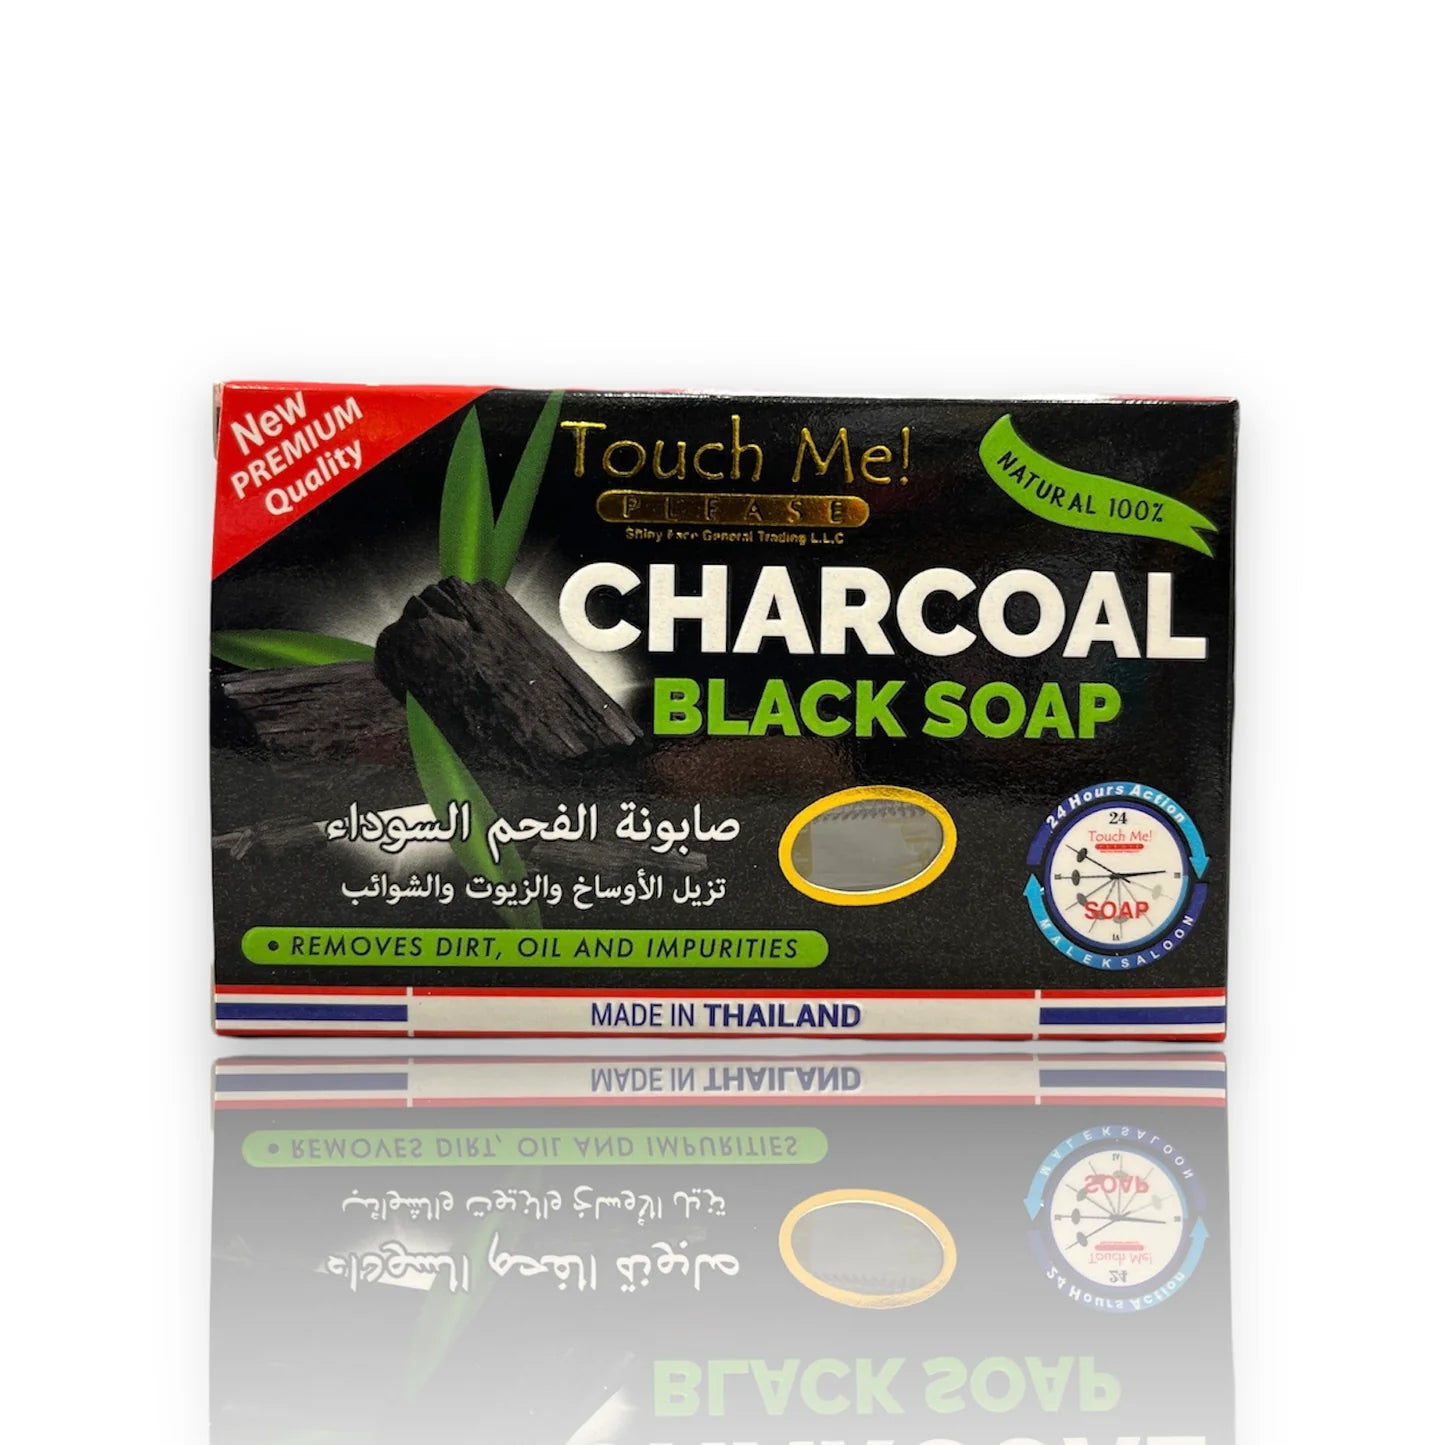 Touch Me Please Charcoal Black Soap